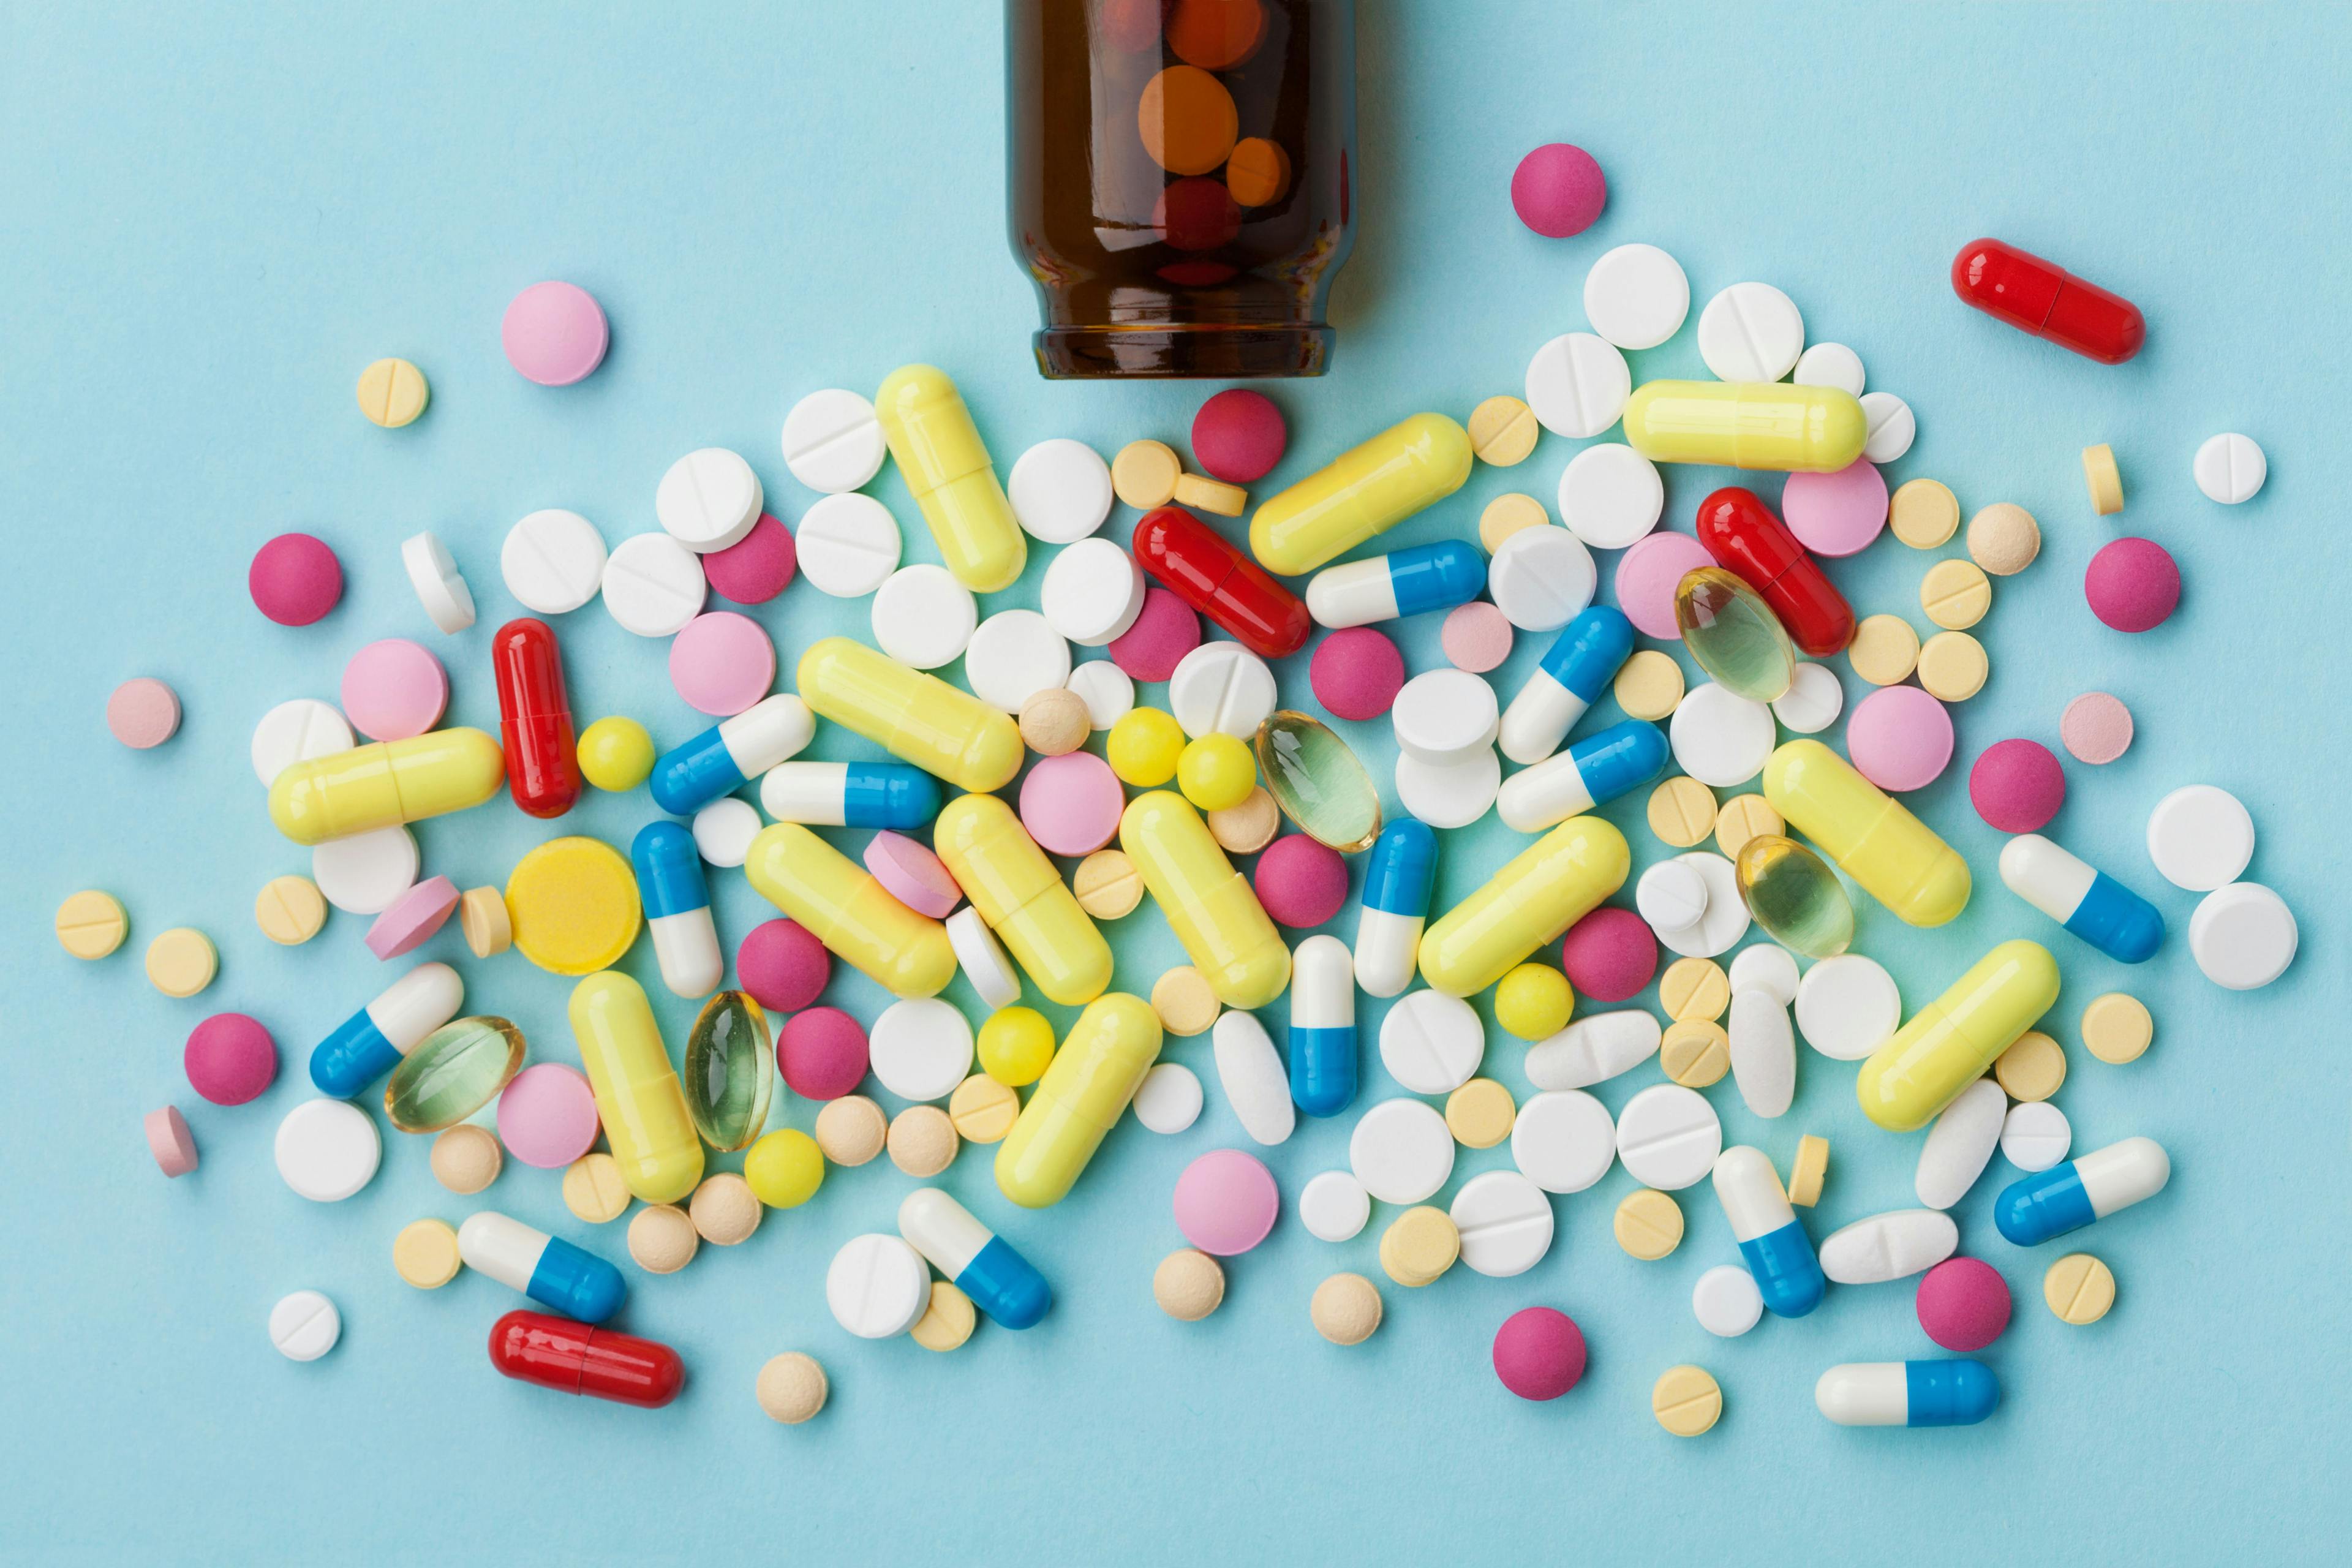 Amazon Introduces Prescription Drug Subscription Program for $5 Monthly Fee